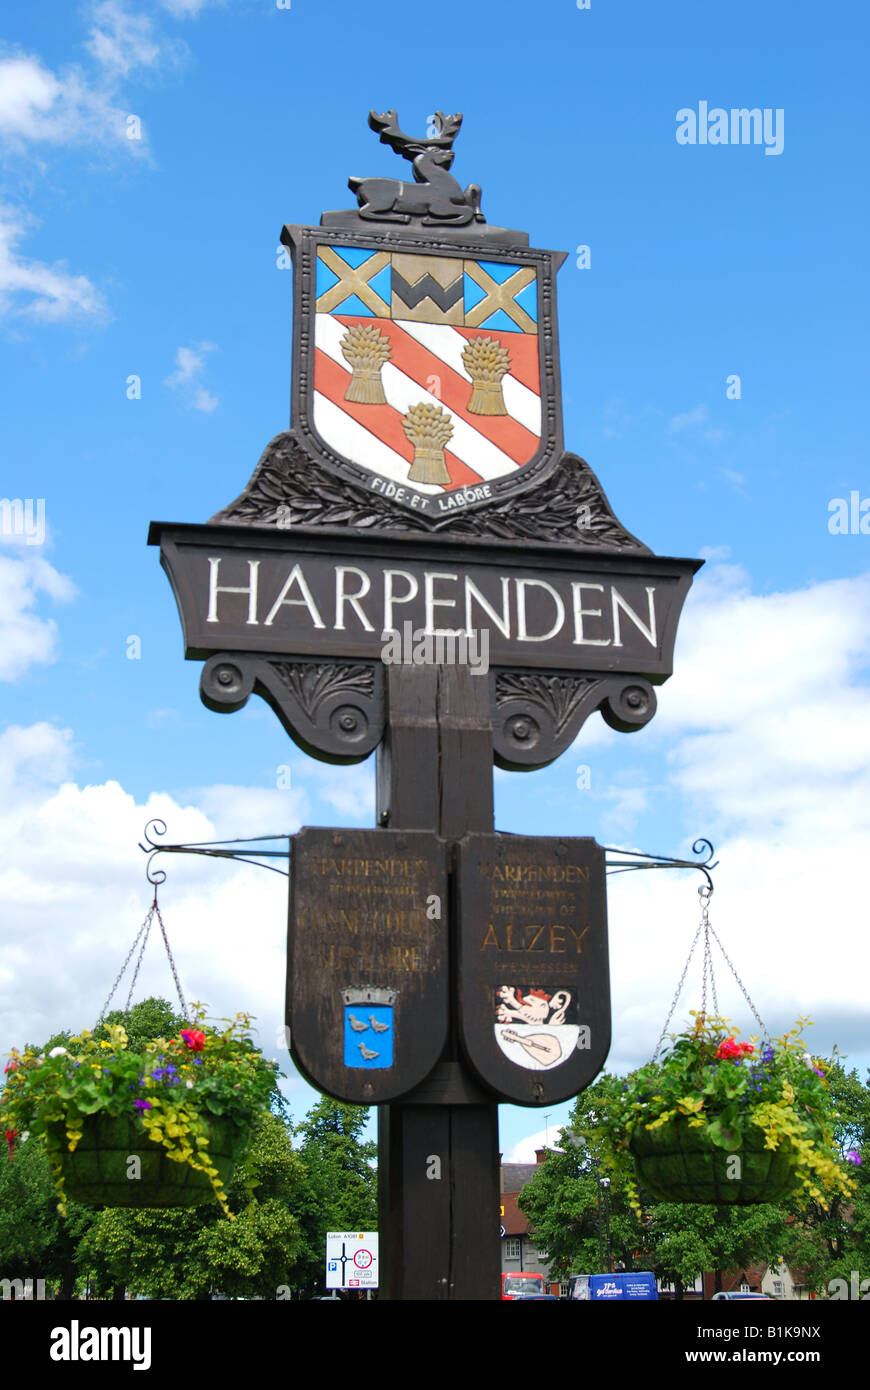 La ville de Harpenden, signe vert d'incubation, Harpenden, Hertfordshire, Angleterre, Royaume-Uni Banque D'Images